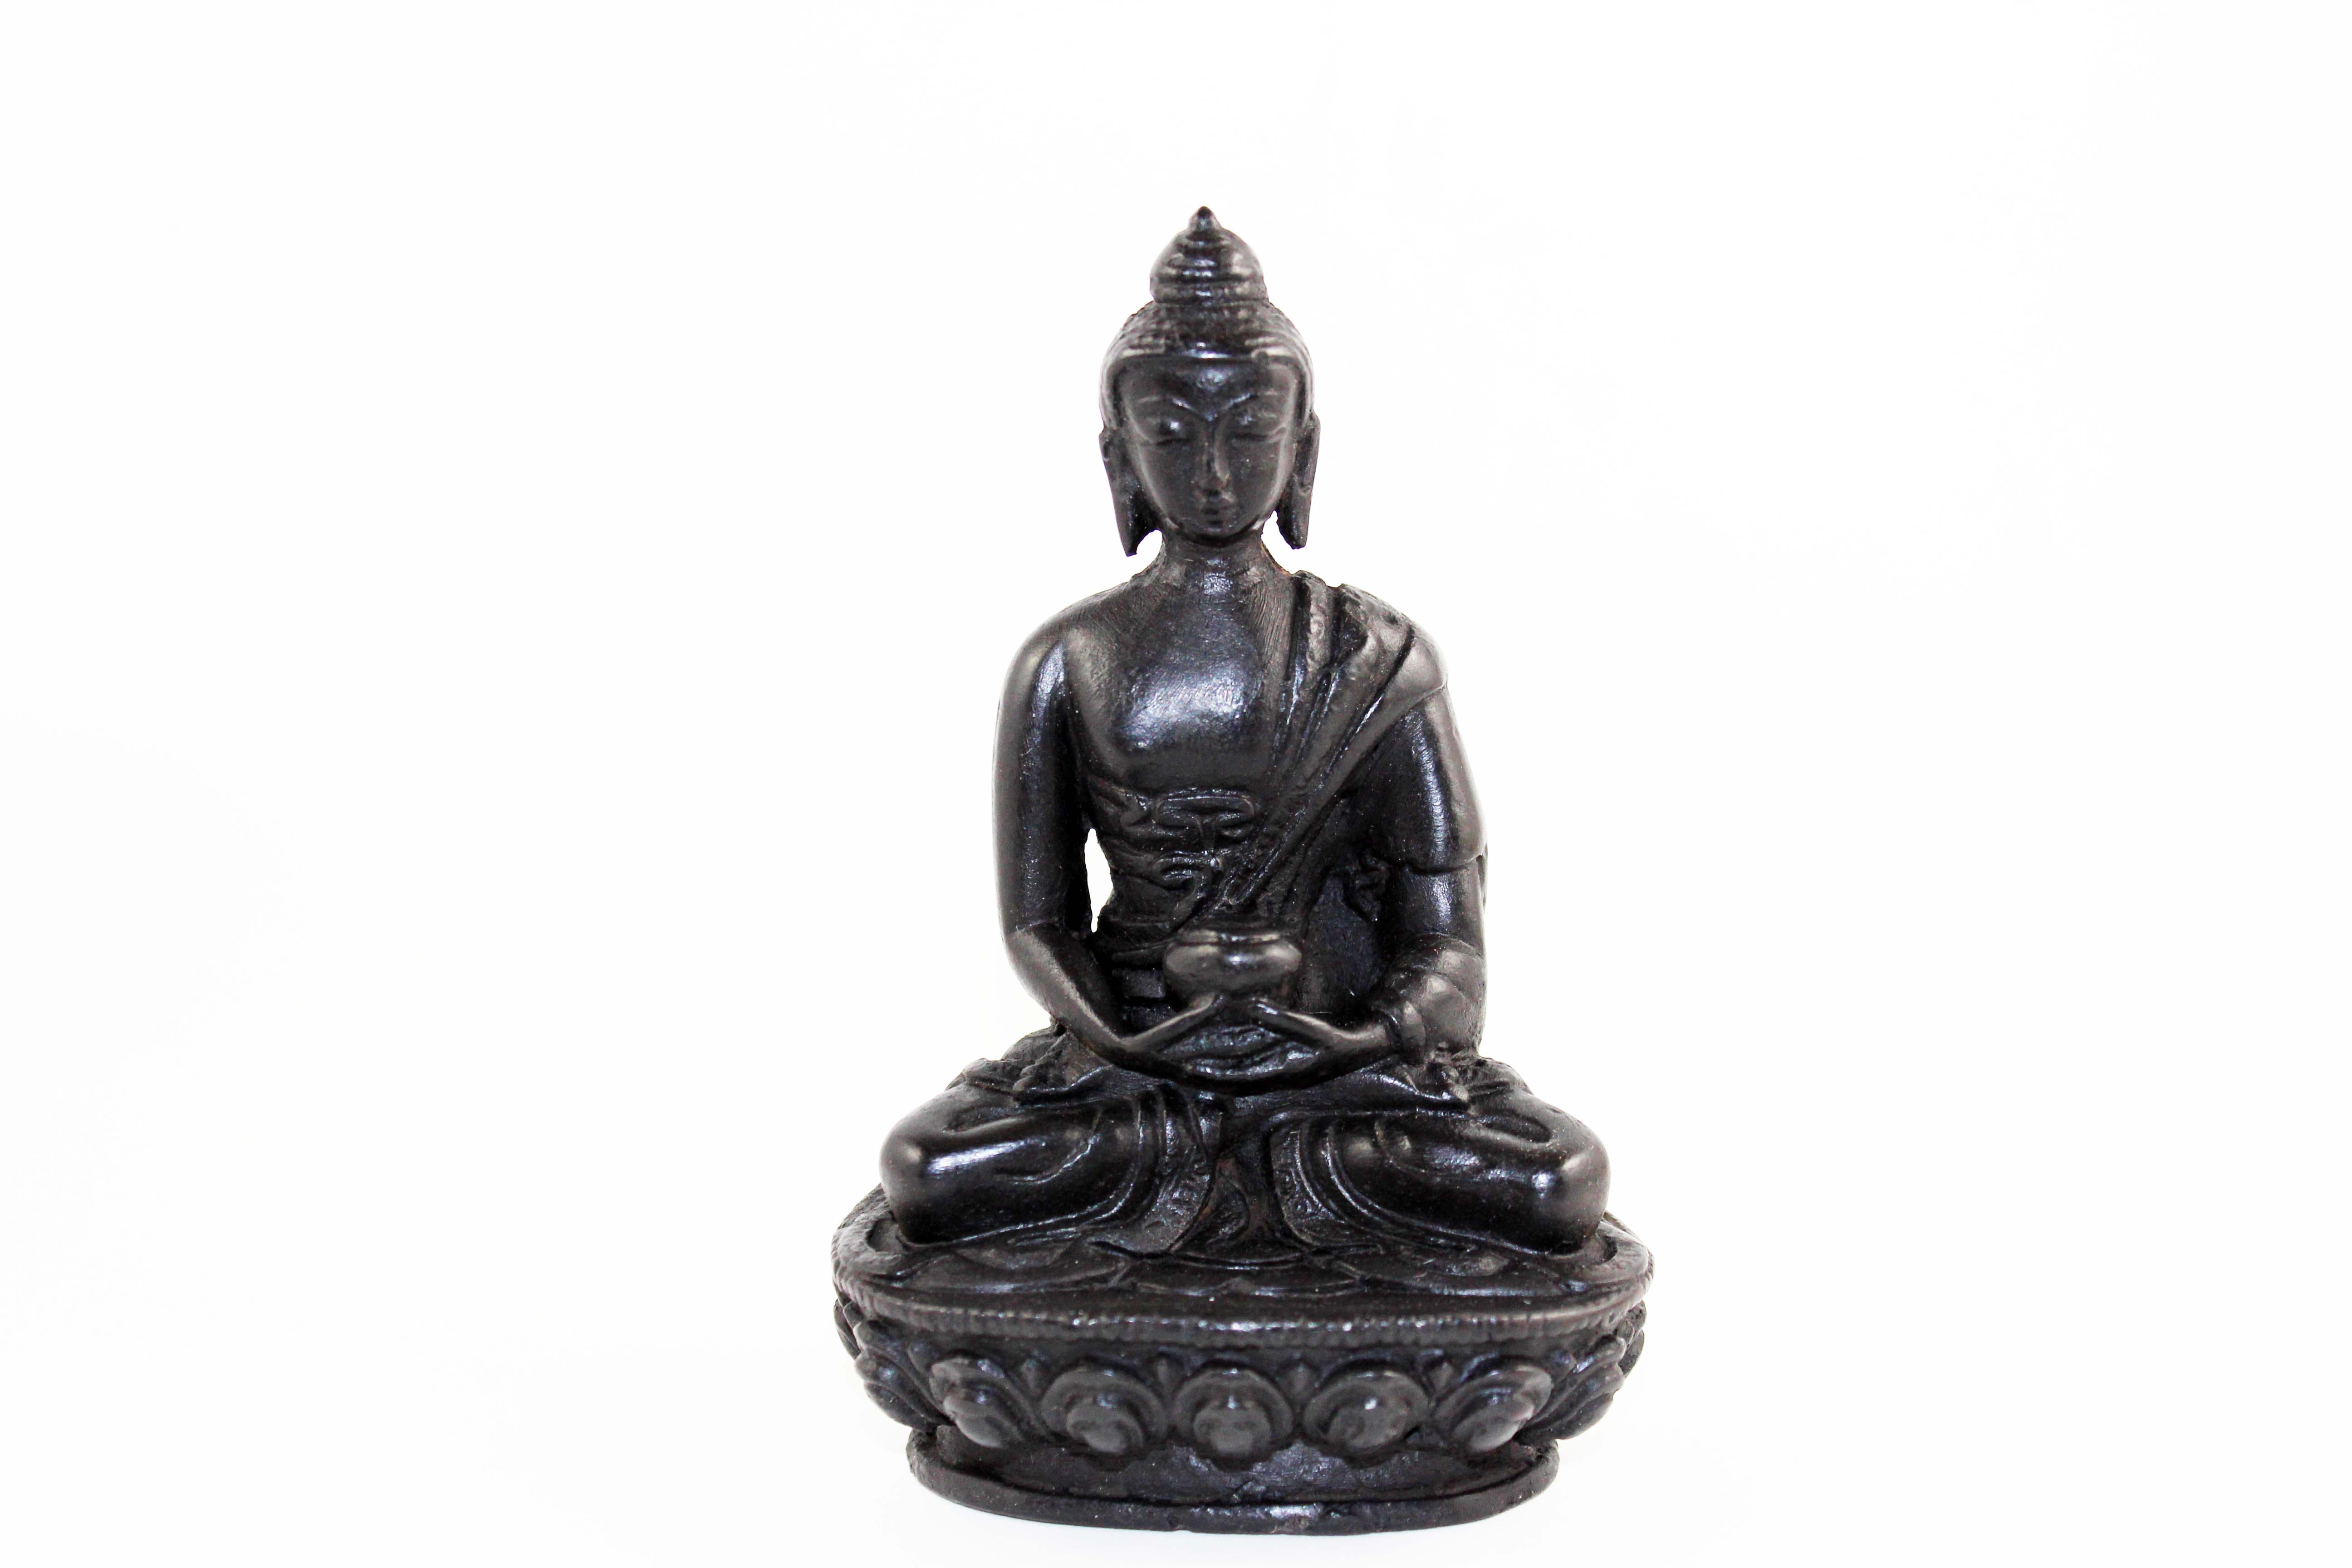 Black resin Buddha statue